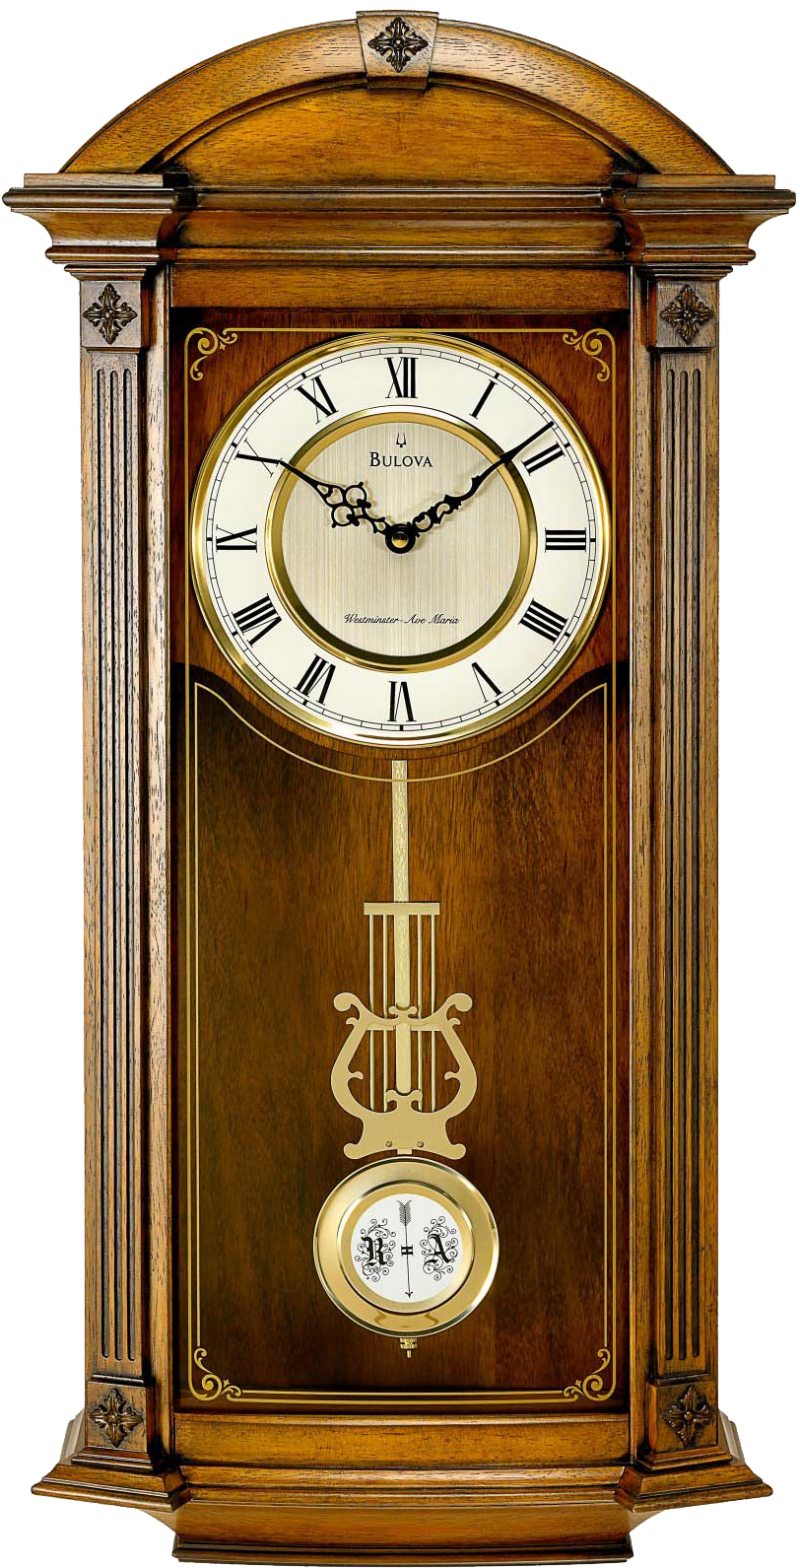 Wall Bell Clock PNG Image - PurePNG | Free transparent CC0 ...